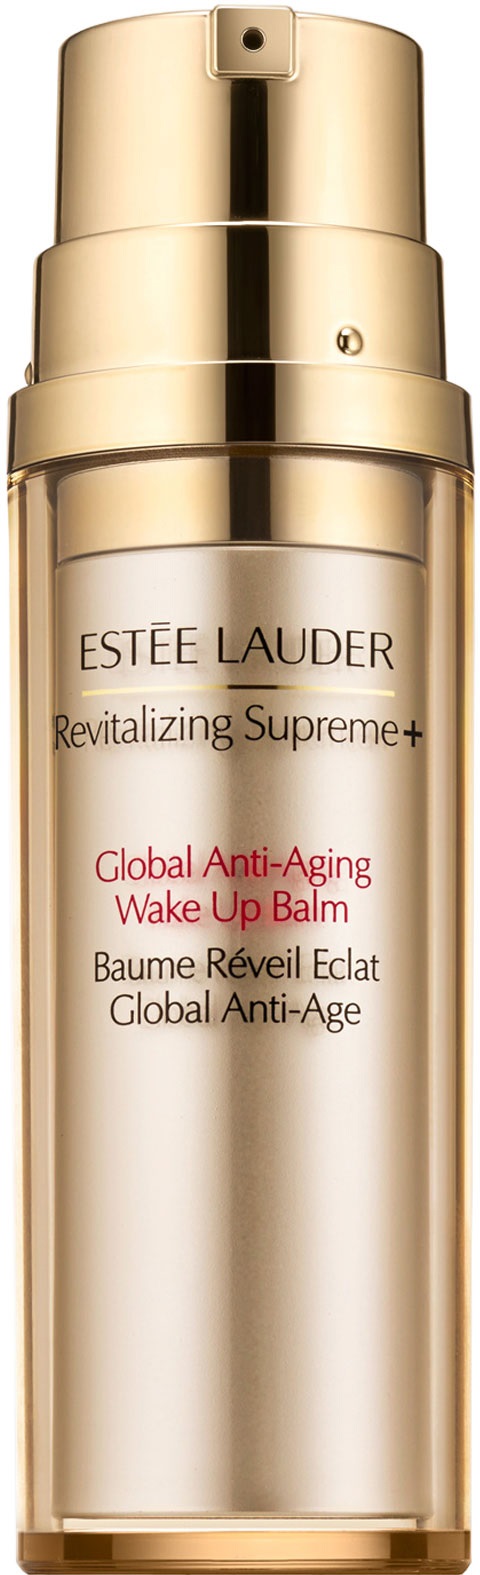 revitalizing supreme global anti aging wake up balm review